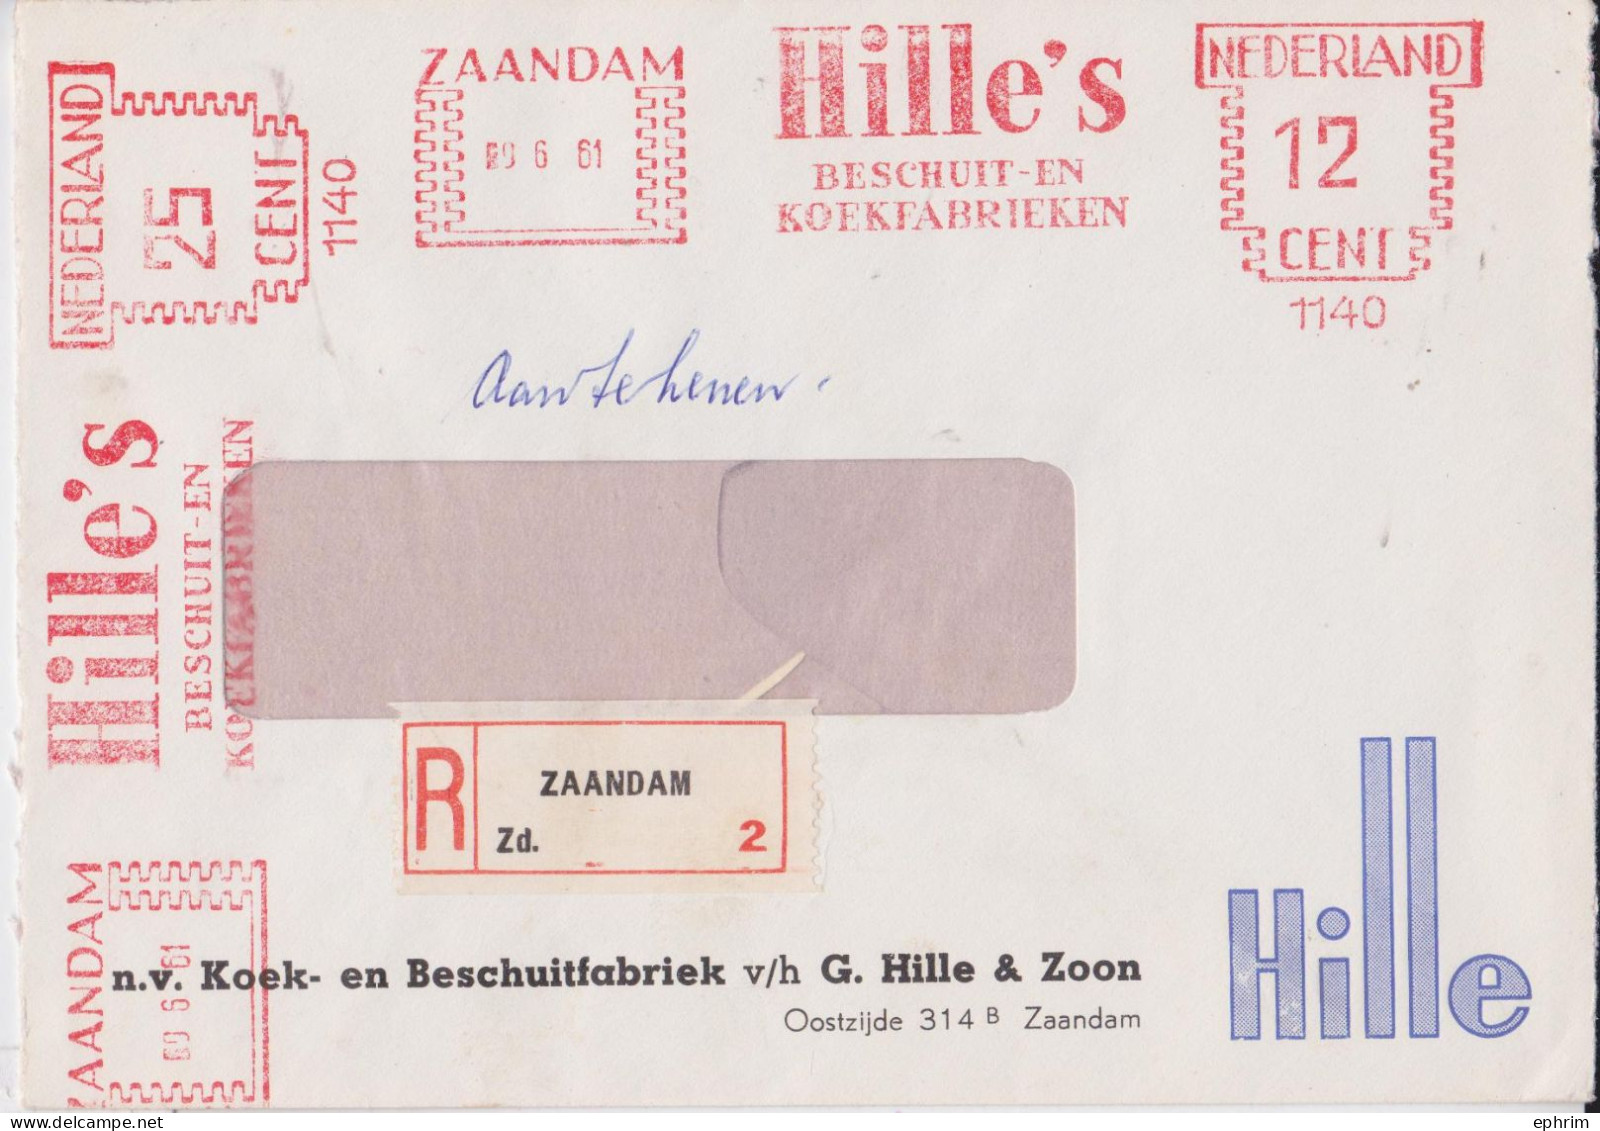 Zaandam Hille's Nederland Ema Red Meter Machine Mail Stampless Registered Cover Lettre Affranchissement Mécanique 1961 - Machines à Affranchir (EMA)